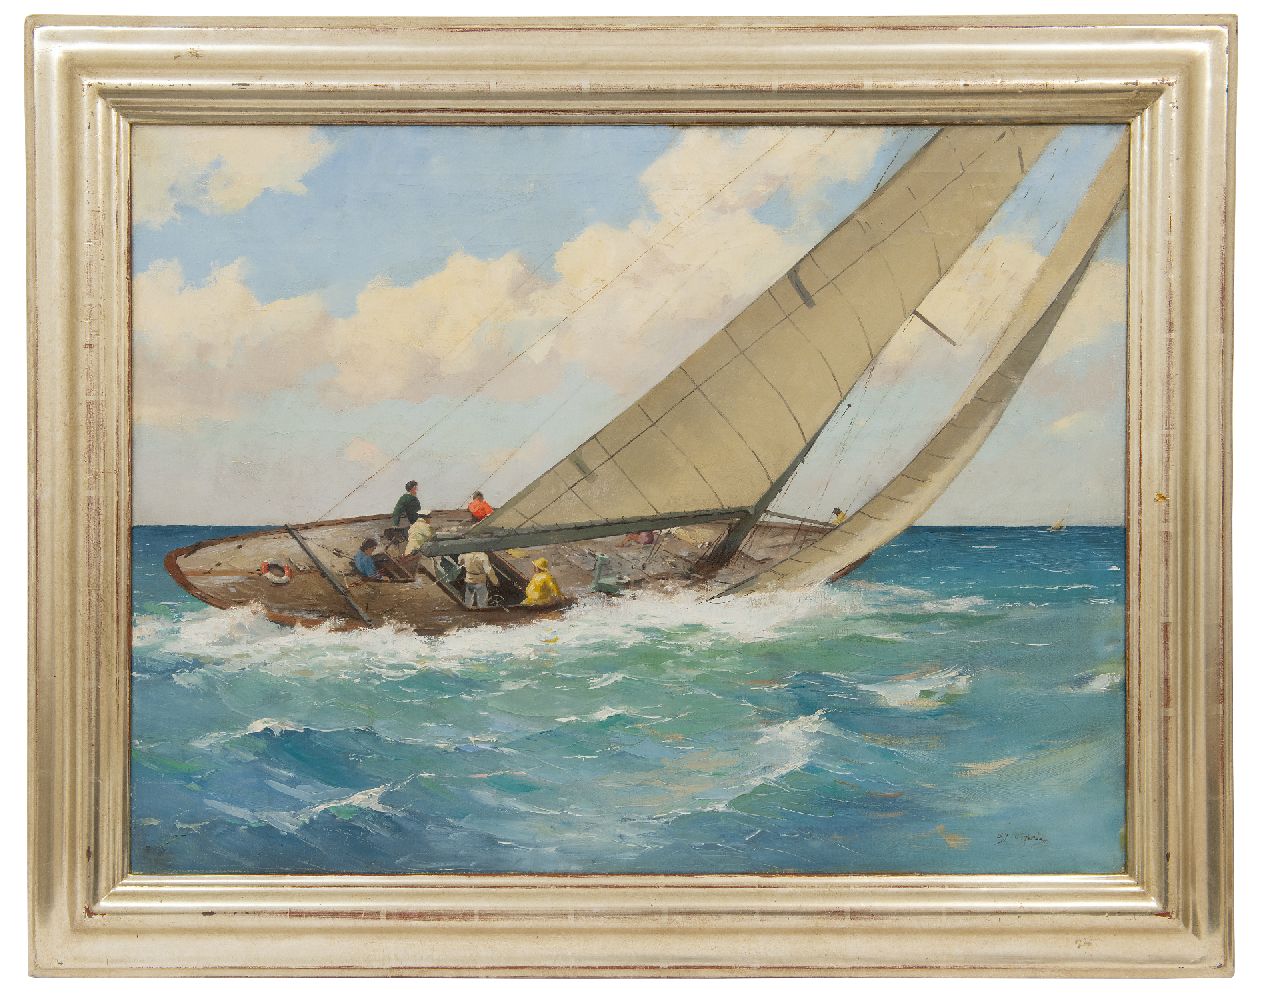 Ligtelijn E.J.  | Evert Jan Ligtelijn | Paintings offered for sale | Sailing yacht in a regatta, oil on canvas 60.2 x 79.6 cm, signed l.r.